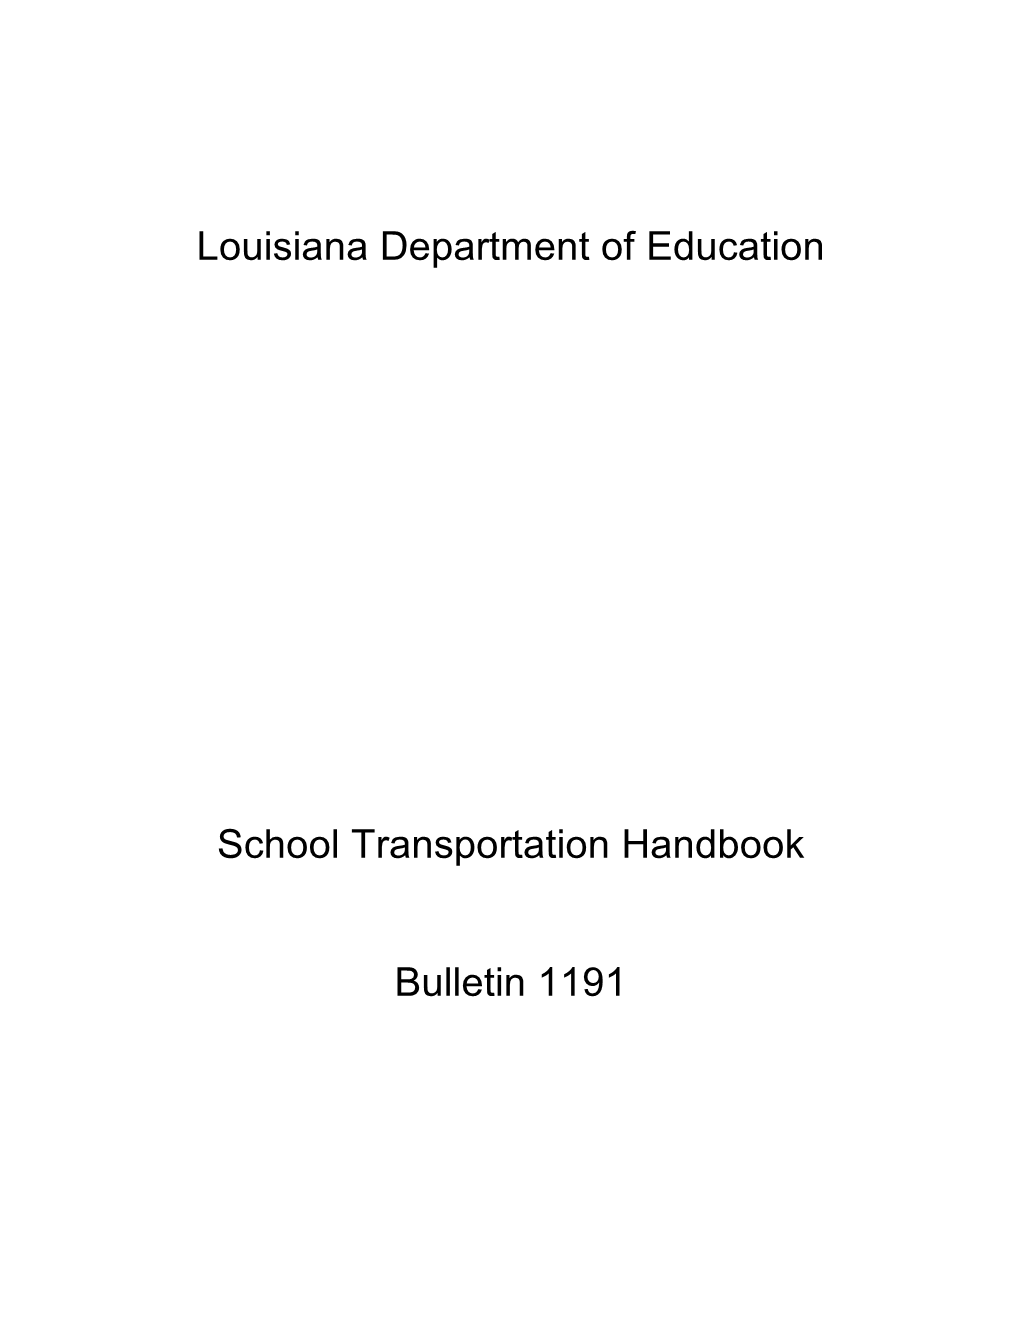 Louisiana Department of Education School Transportation Handbook Bulletin 1191